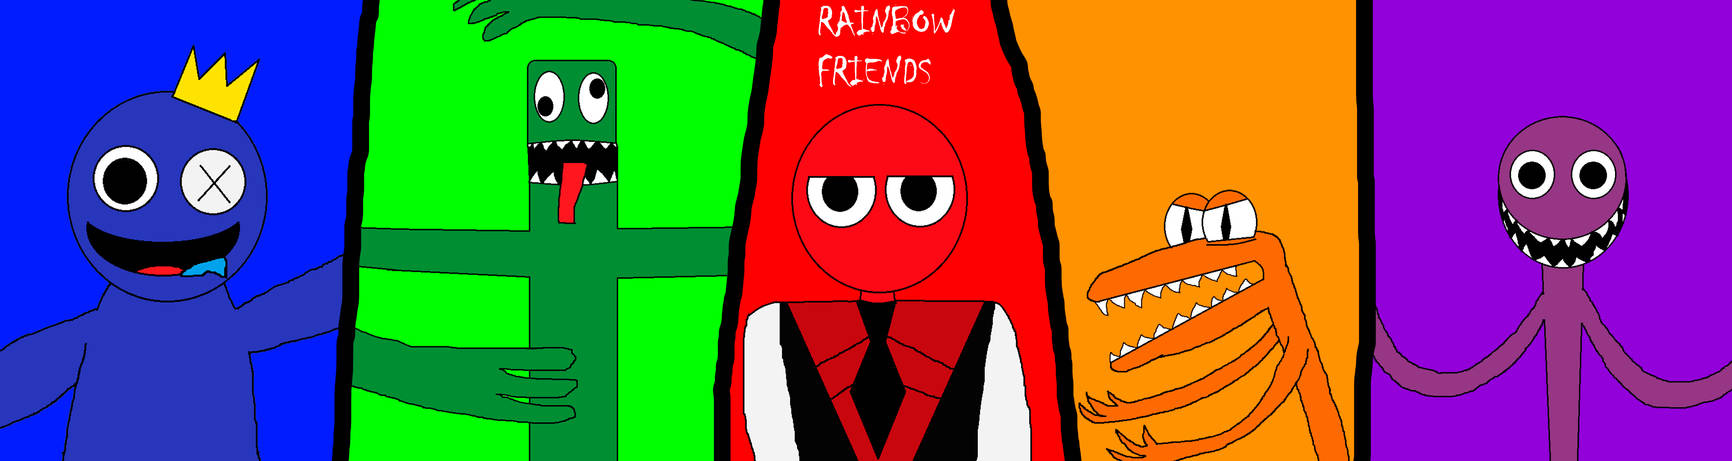 Rainbow Friends - Green by artyestman on DeviantArt